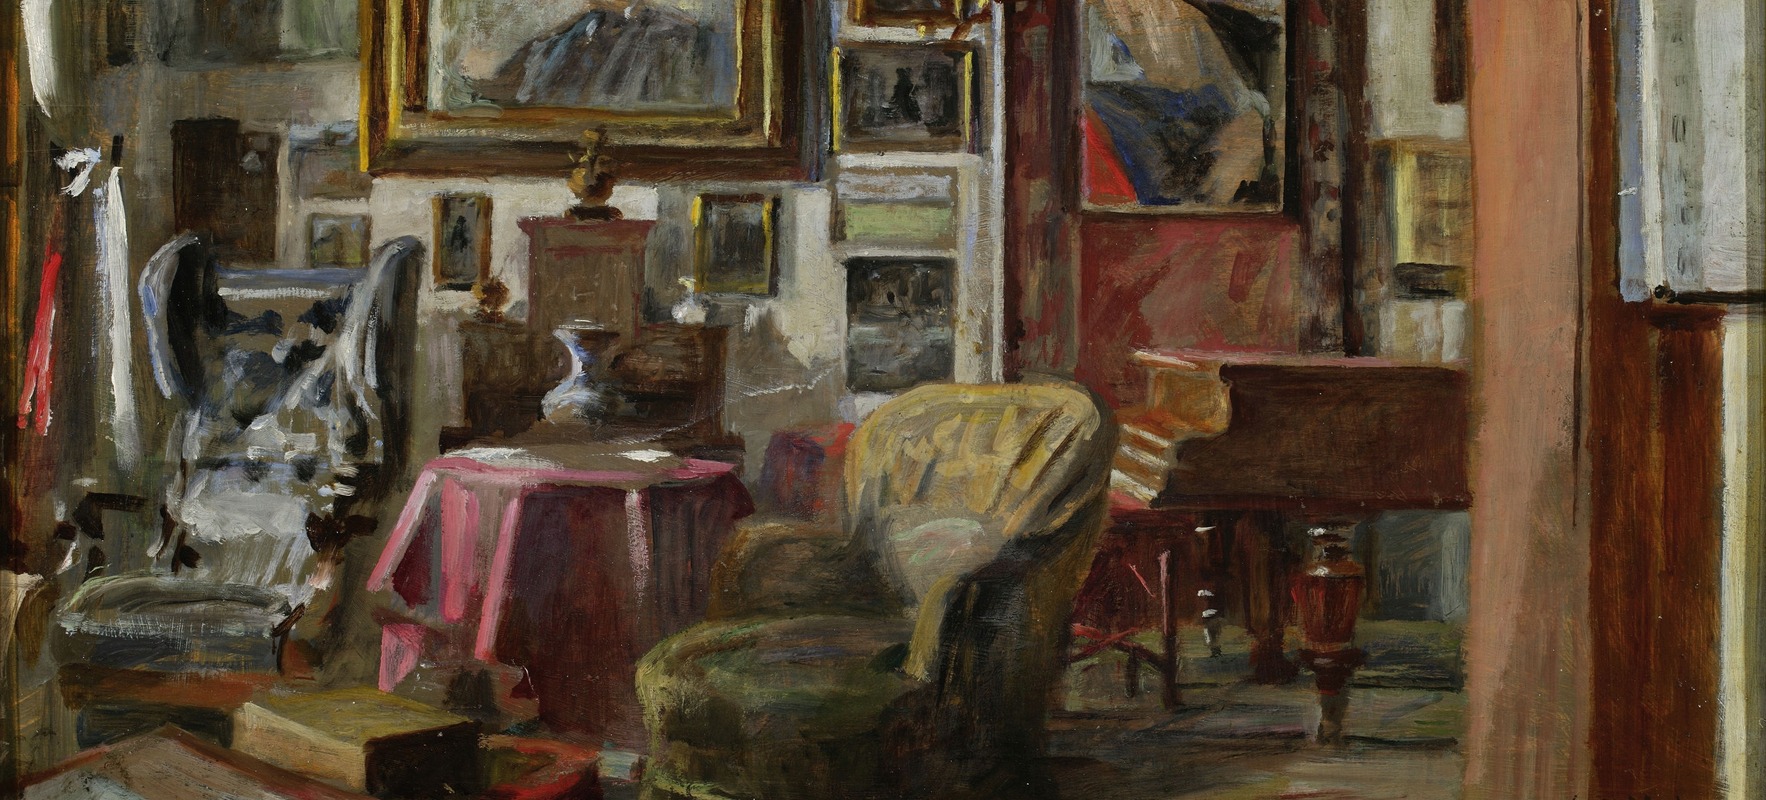 Living-room interior in Lusławice by Jacek Malczewski - Artvee